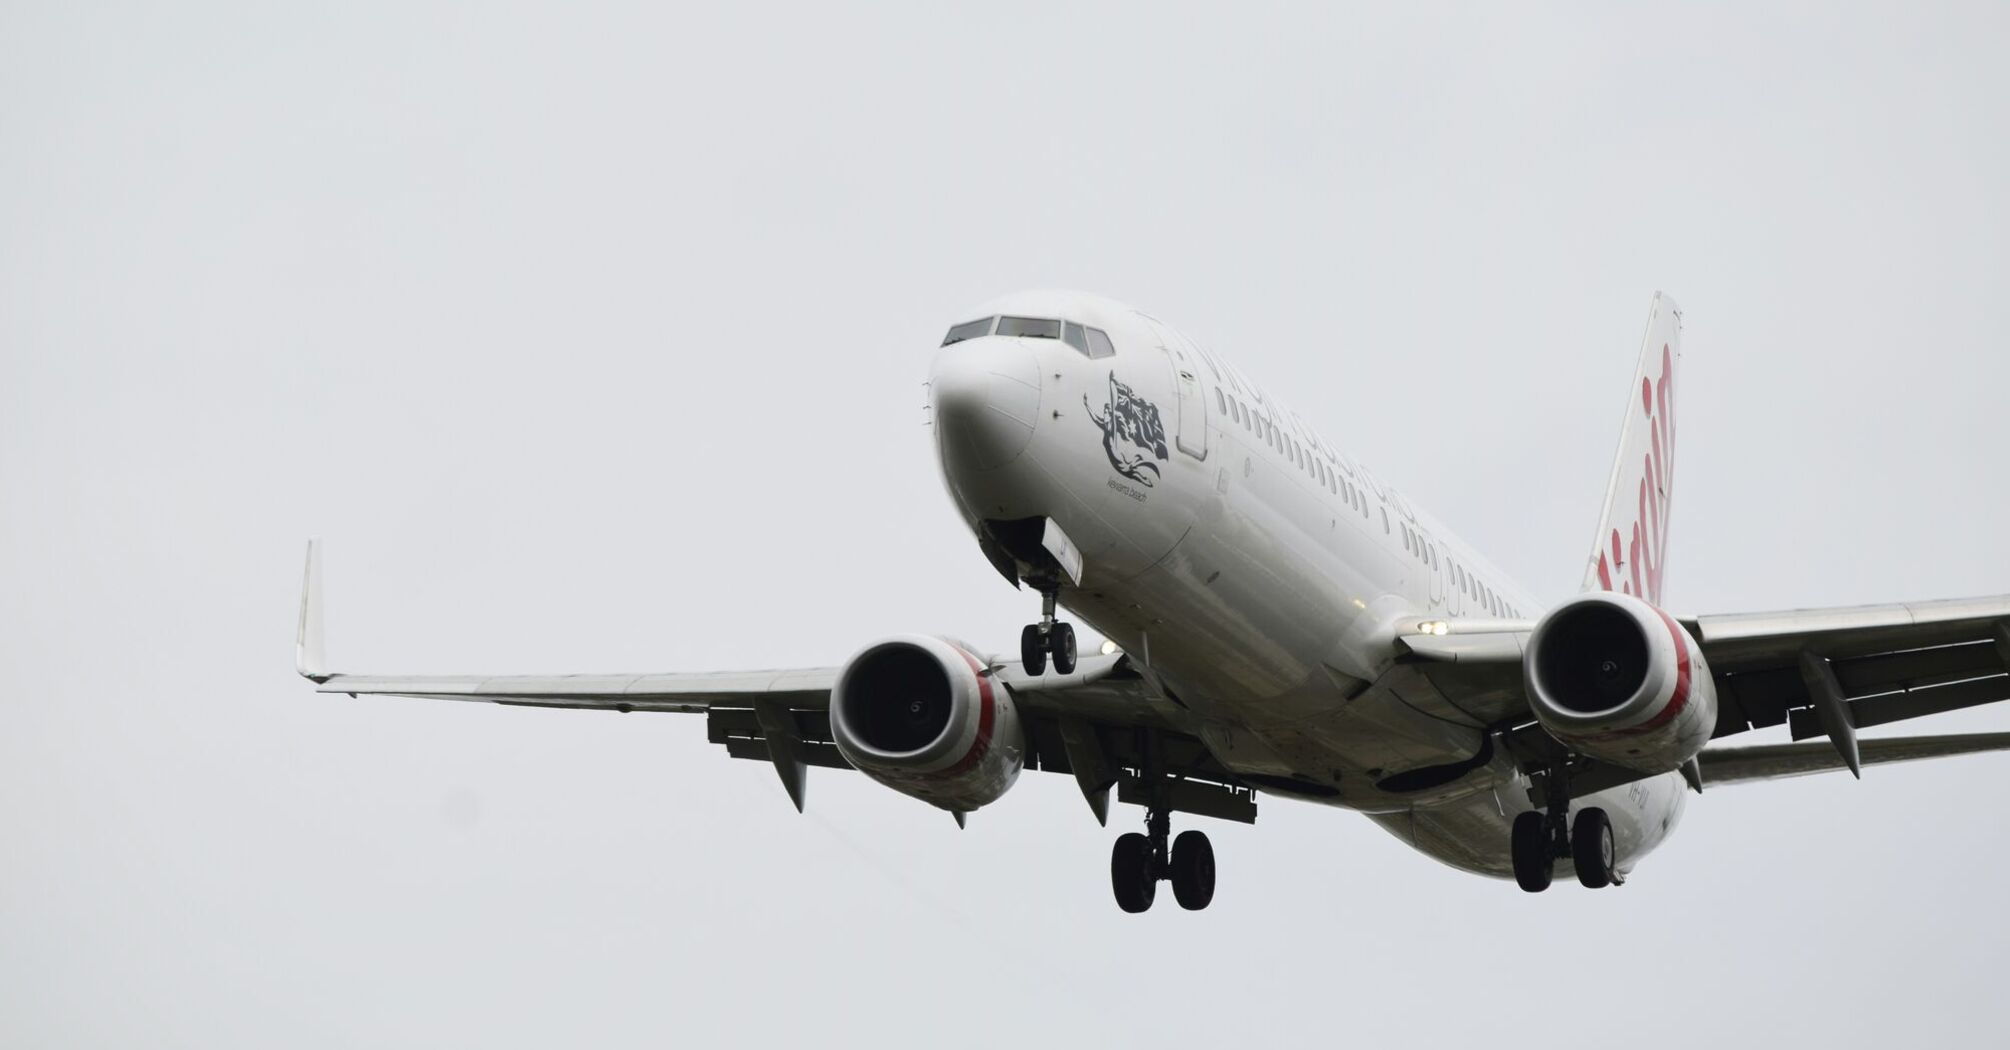 Virgin Australia 737-800 landing at Runway 